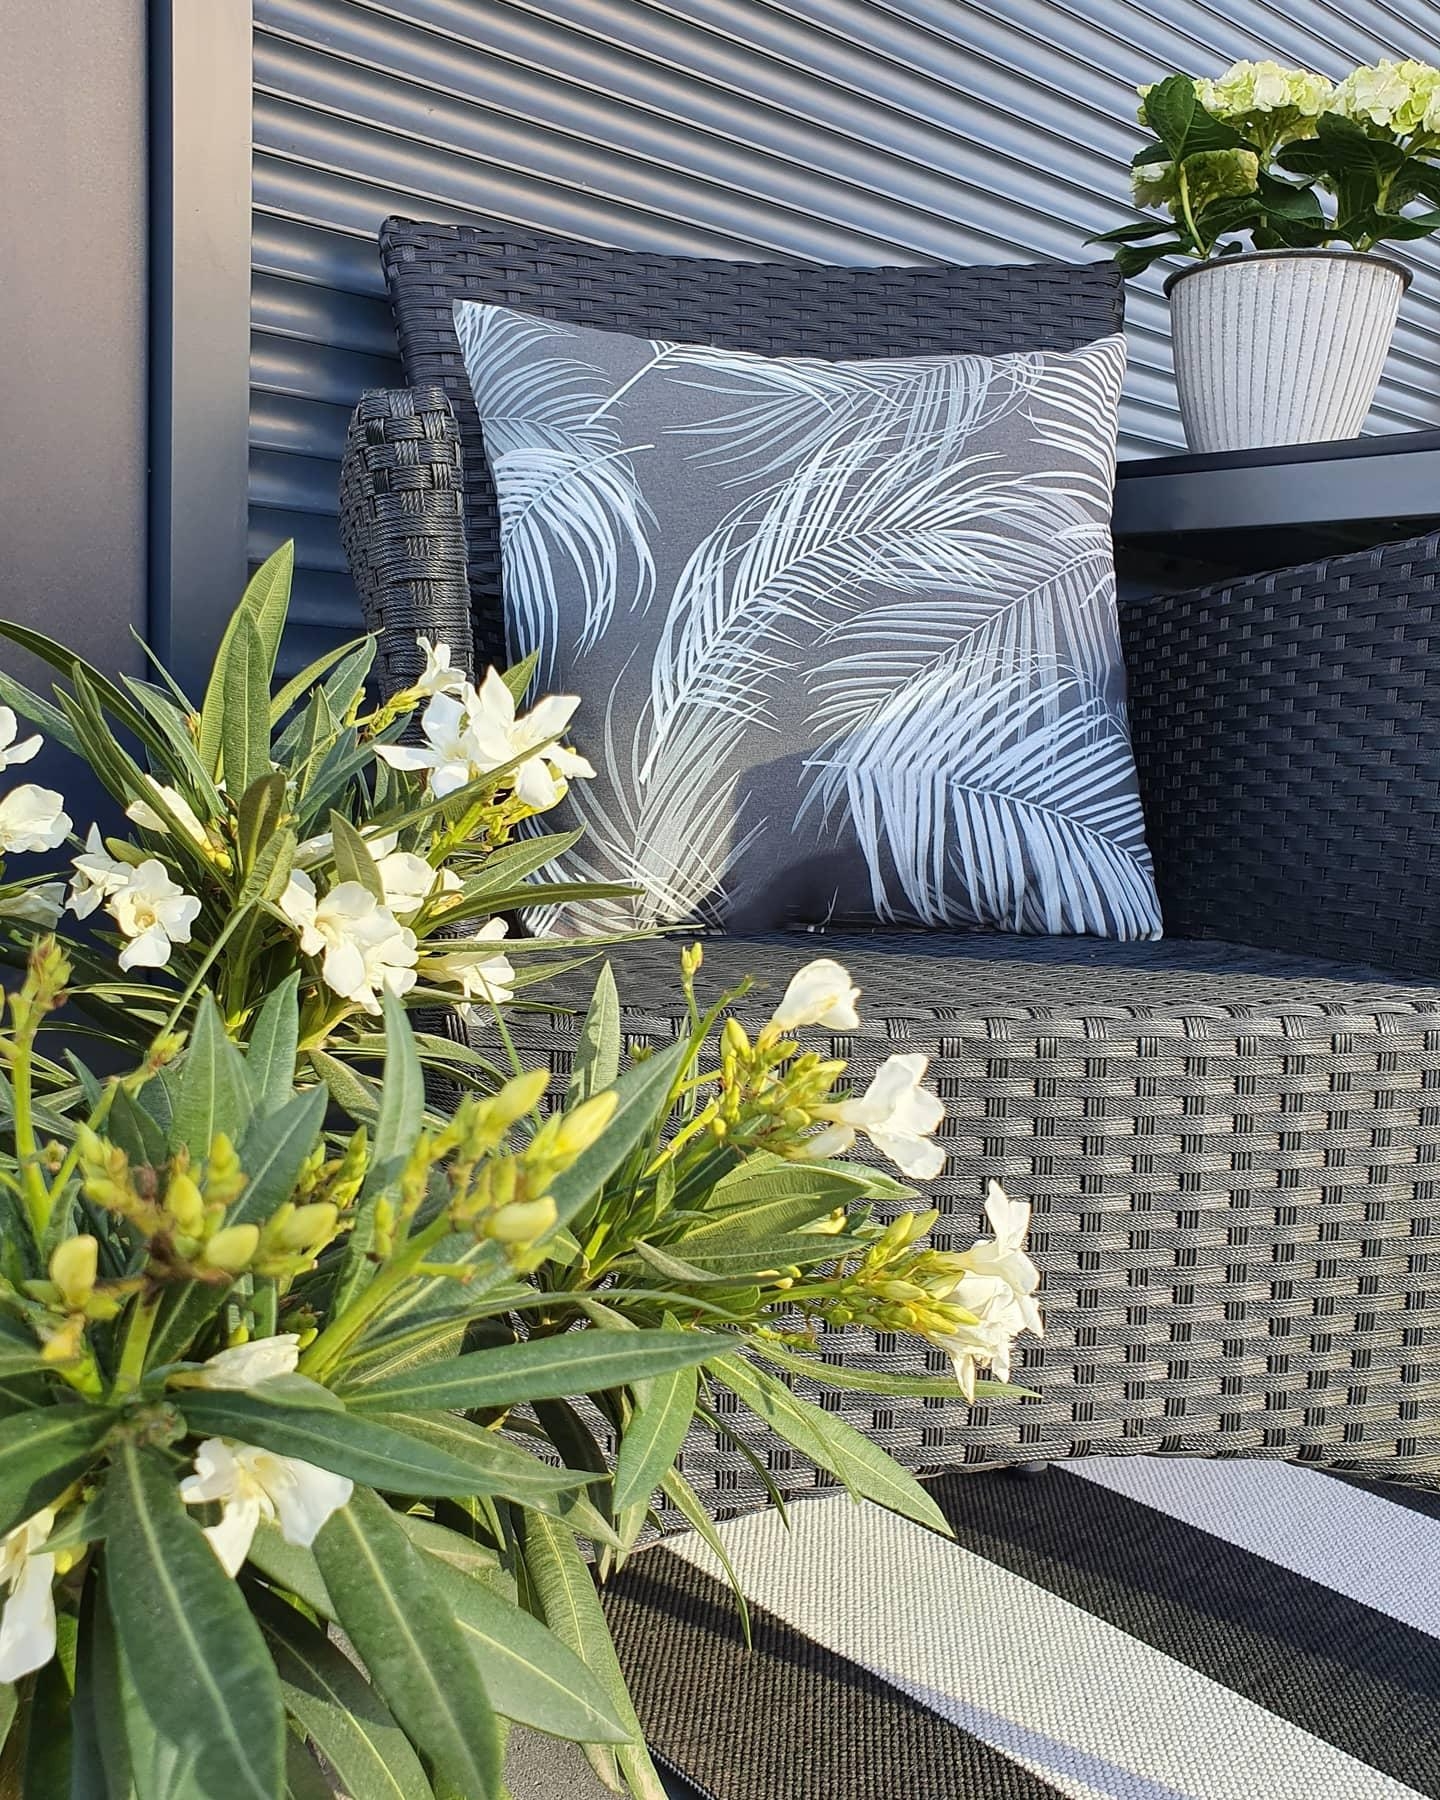 Oleander in weiß
#oleander #outdoor #outdoorzimmer #terrasse #terace #homeandliving #homestyle 